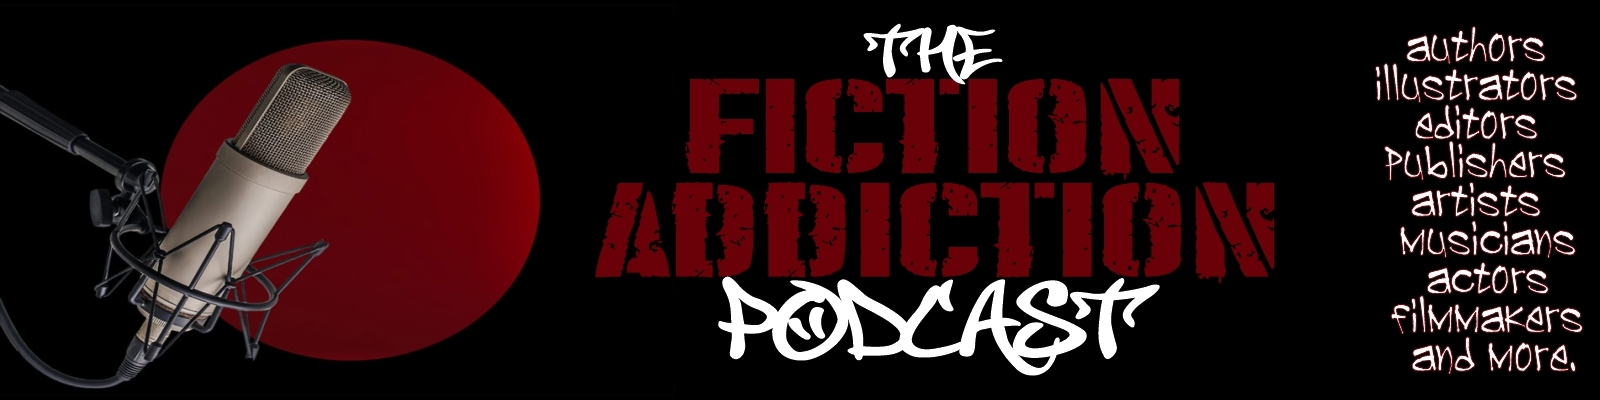 The Fiction Addiction Podcast